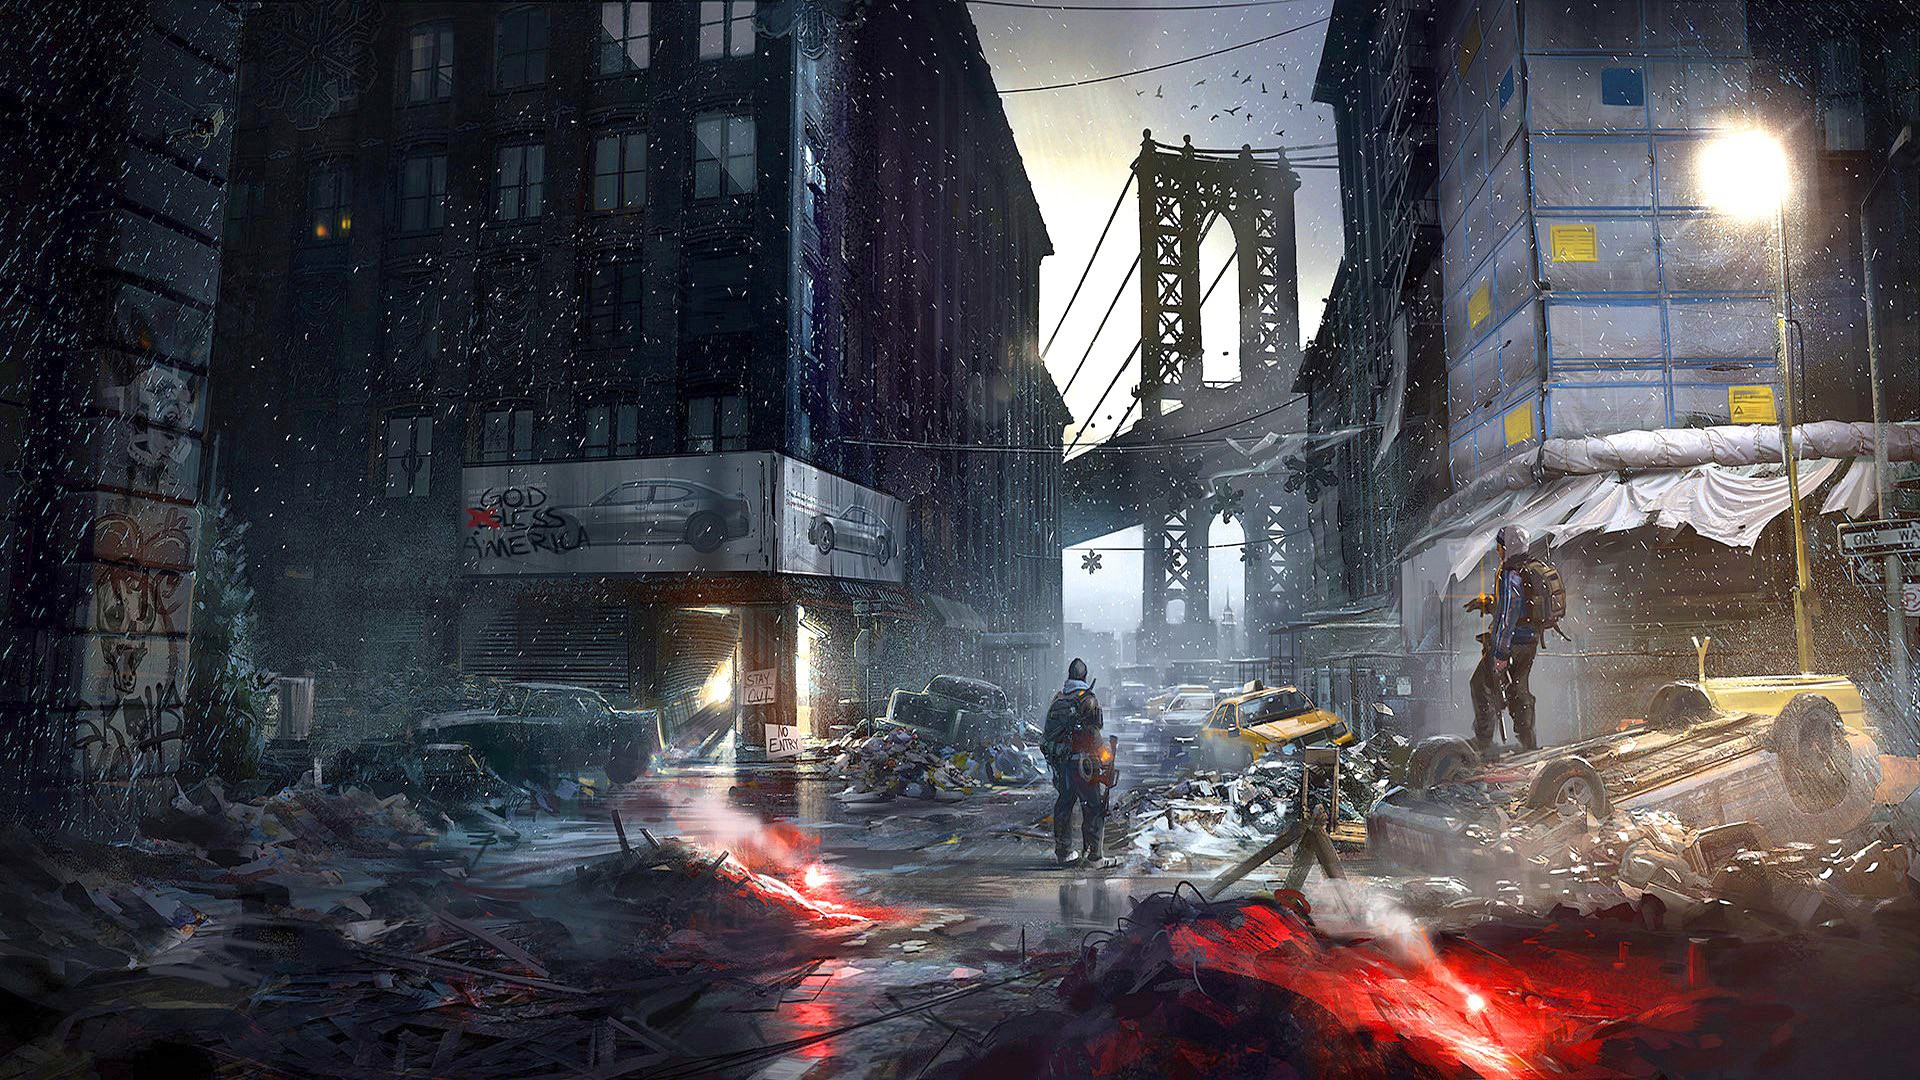 video games, Artwork, Digital art, Street, Car, Bridge, New York City, City, Snow, Birds, Wheels, Trash, Tom Clancys The Division Wallpaper